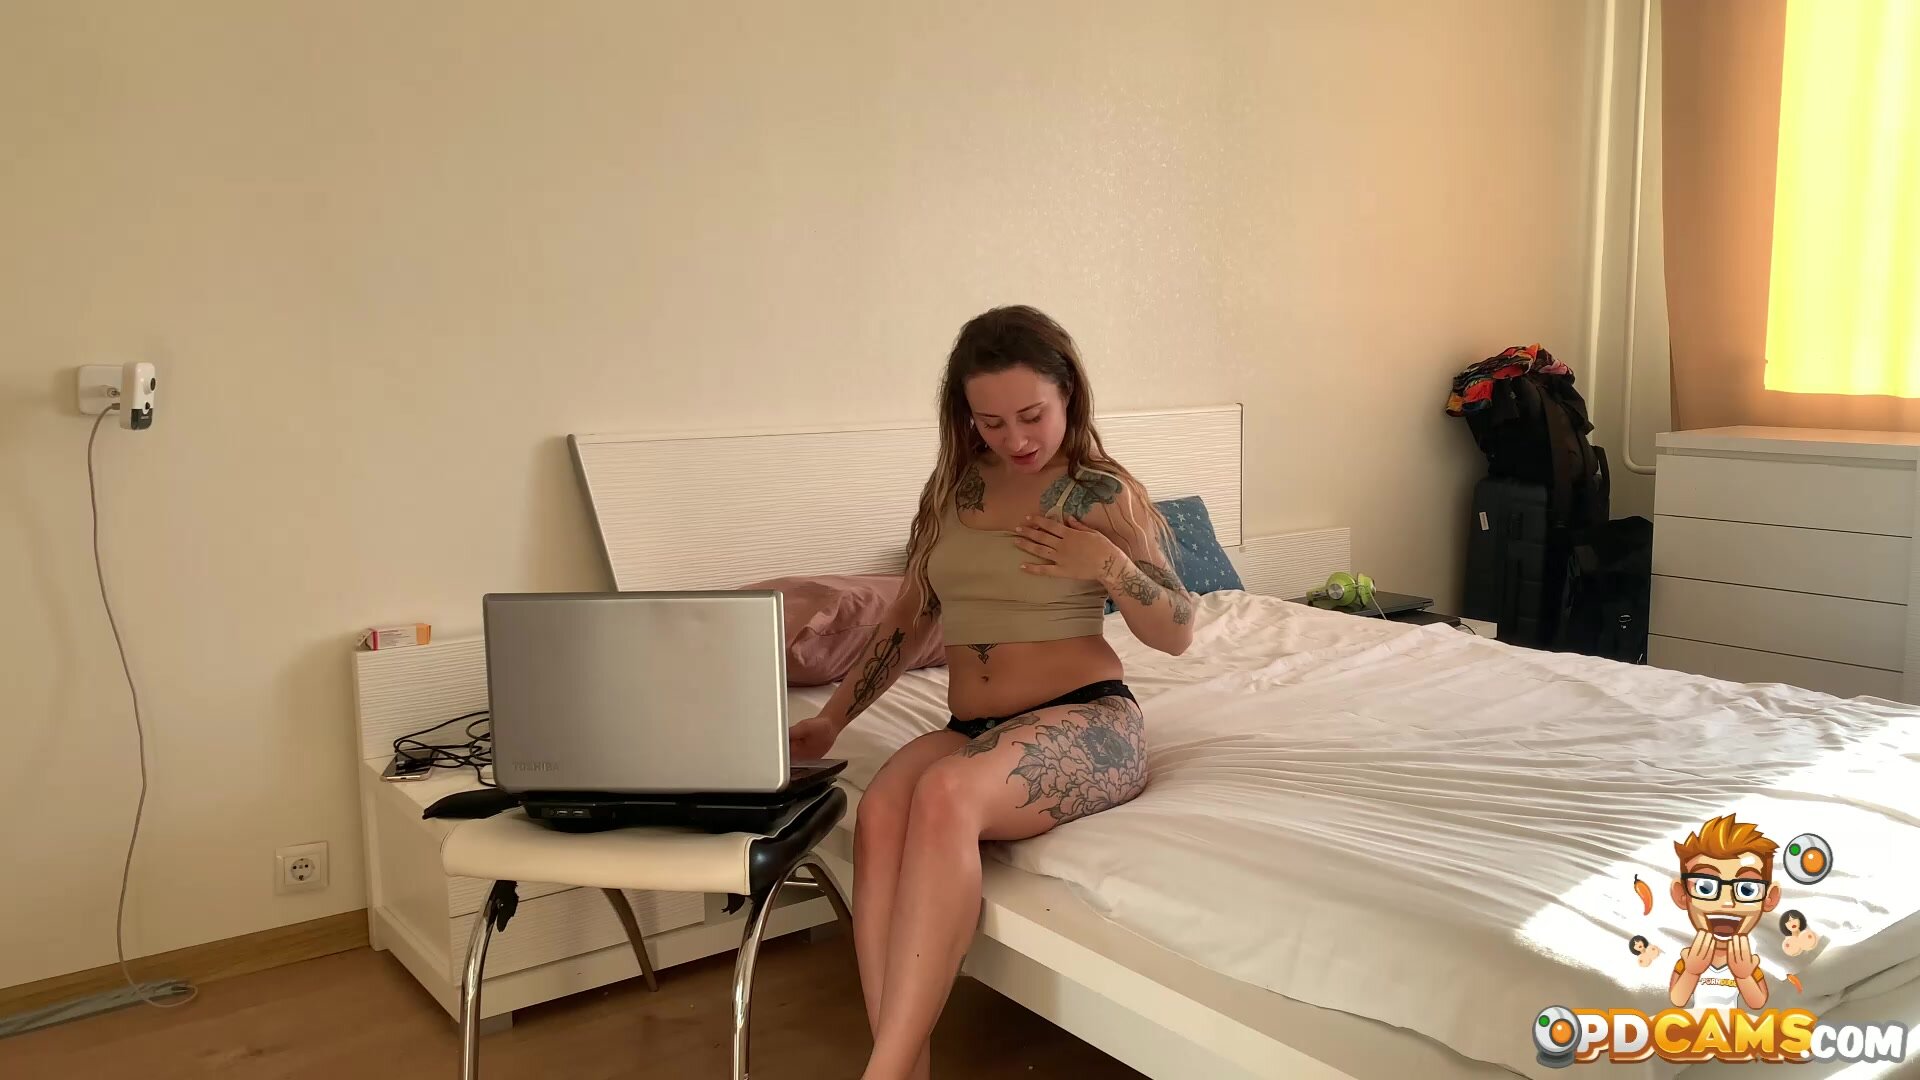 Masturbating with a stranger on webcam